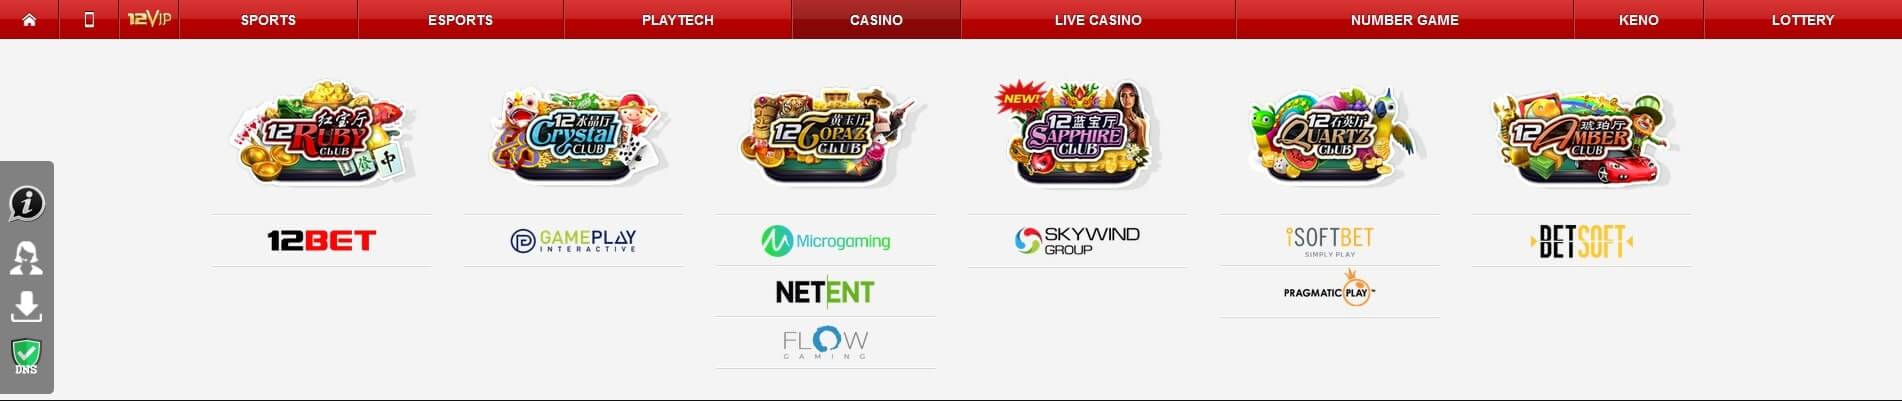 12bet casino games